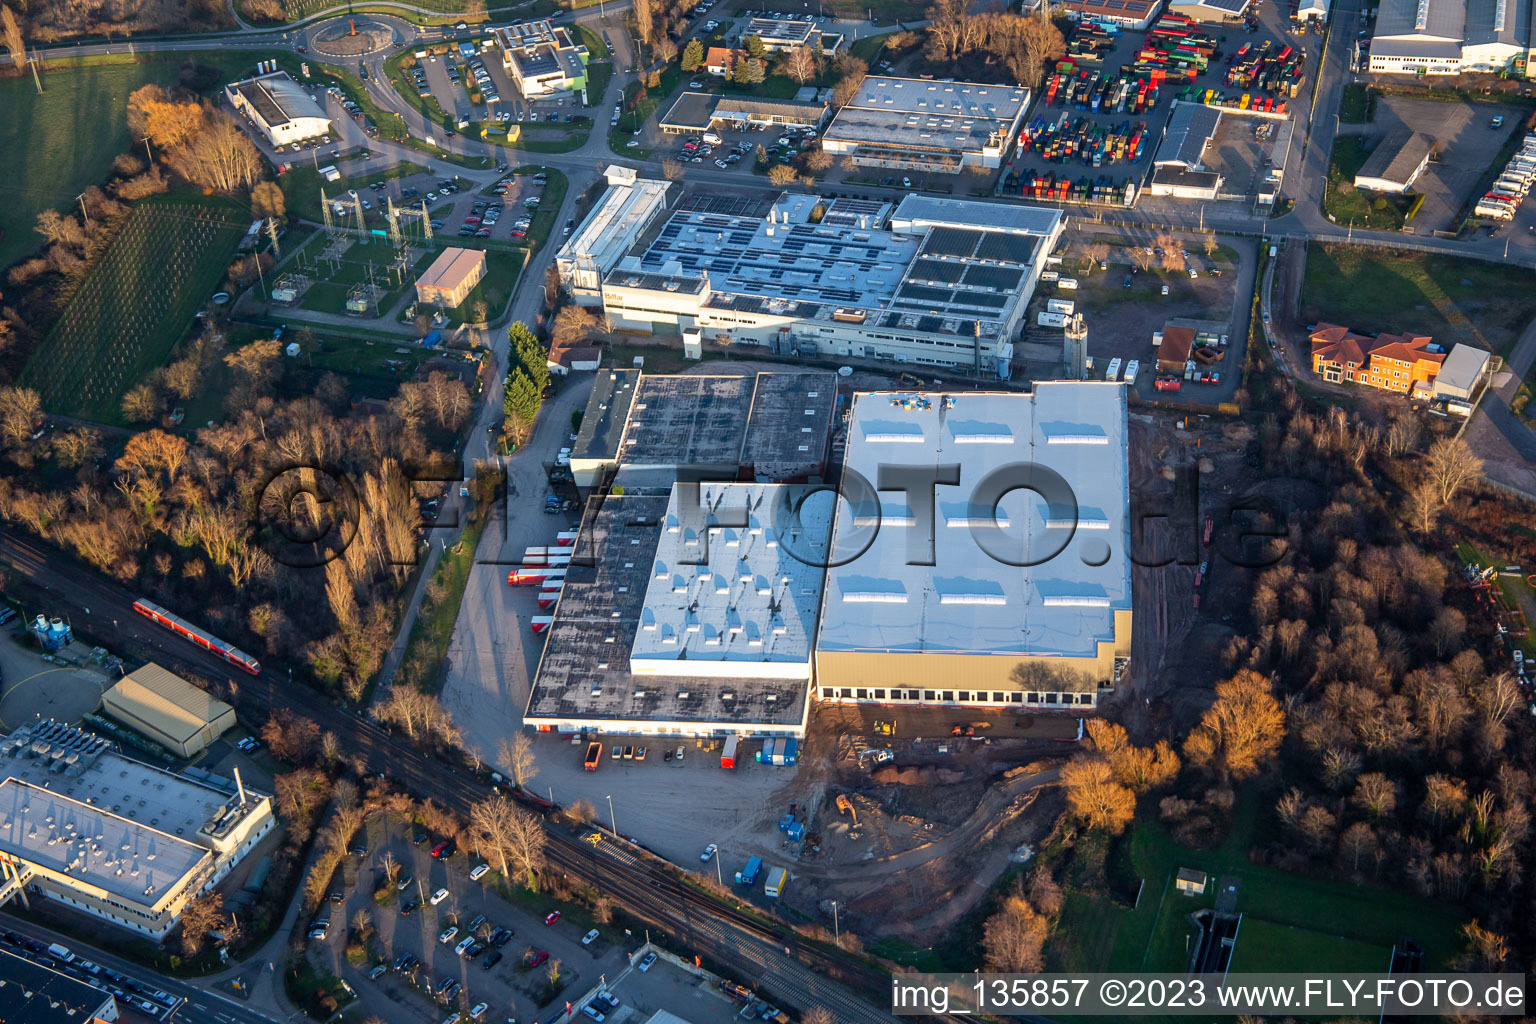 Oblique view of Biffar GmbH & Co. KG in Edenkoben in the state Rhineland-Palatinate, Germany